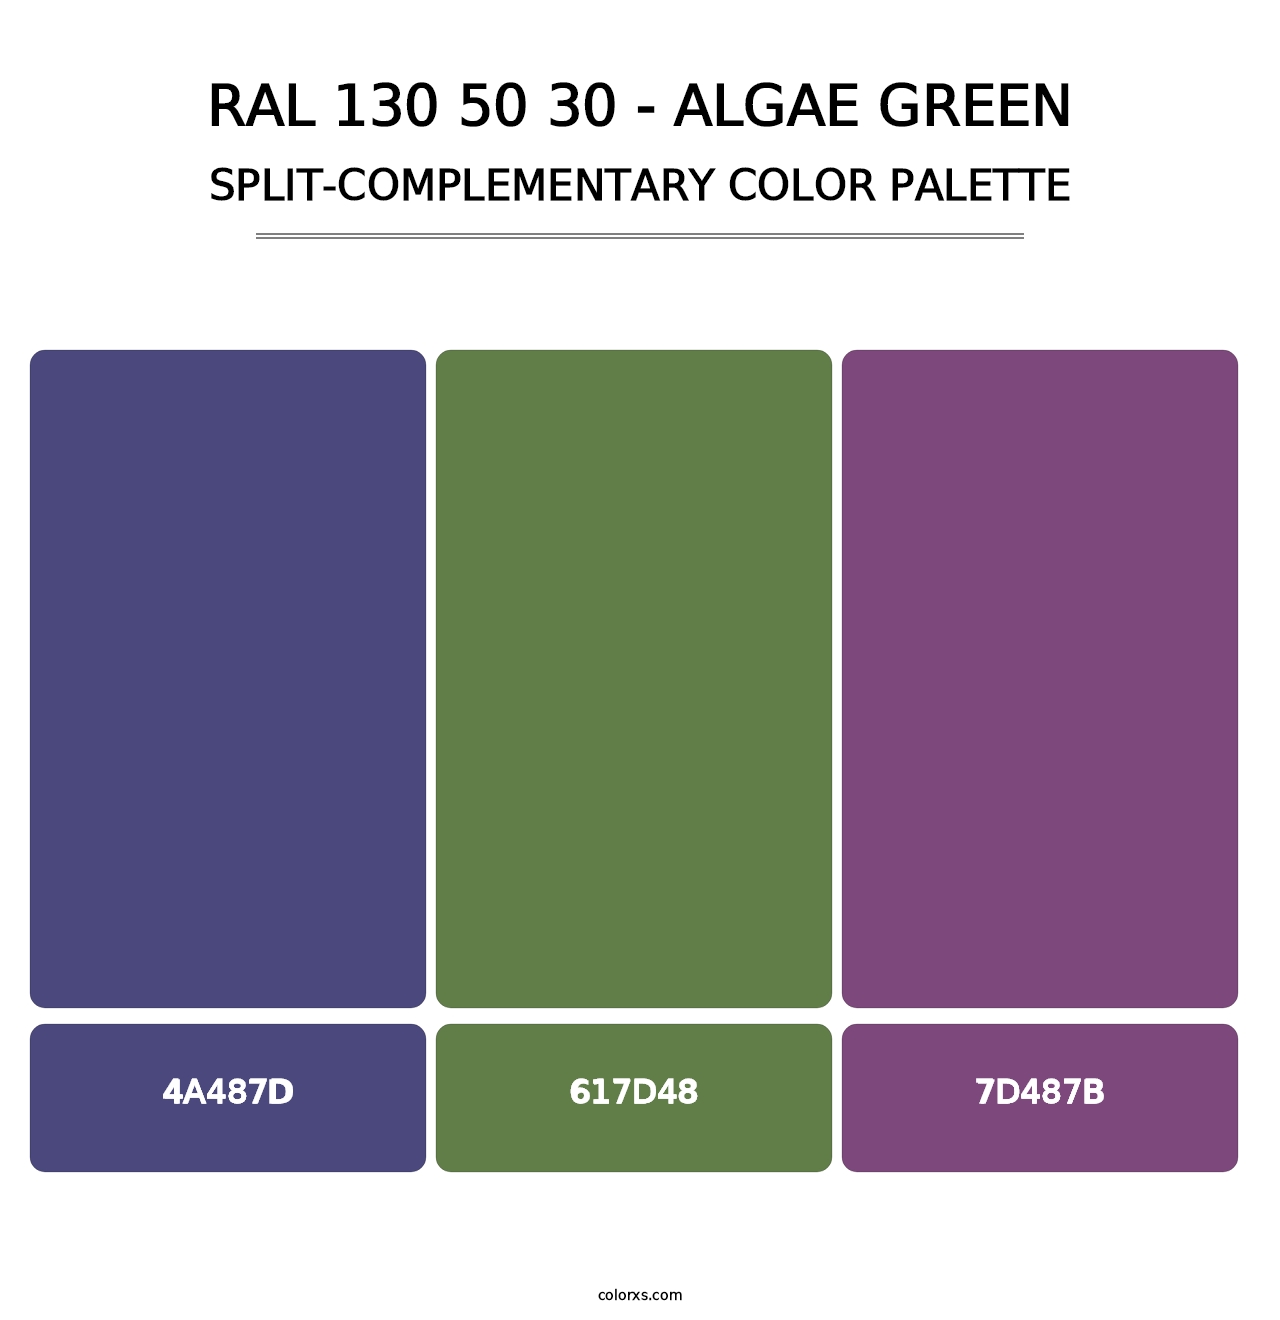 RAL 130 50 30 - Algae Green - Split-Complementary Color Palette